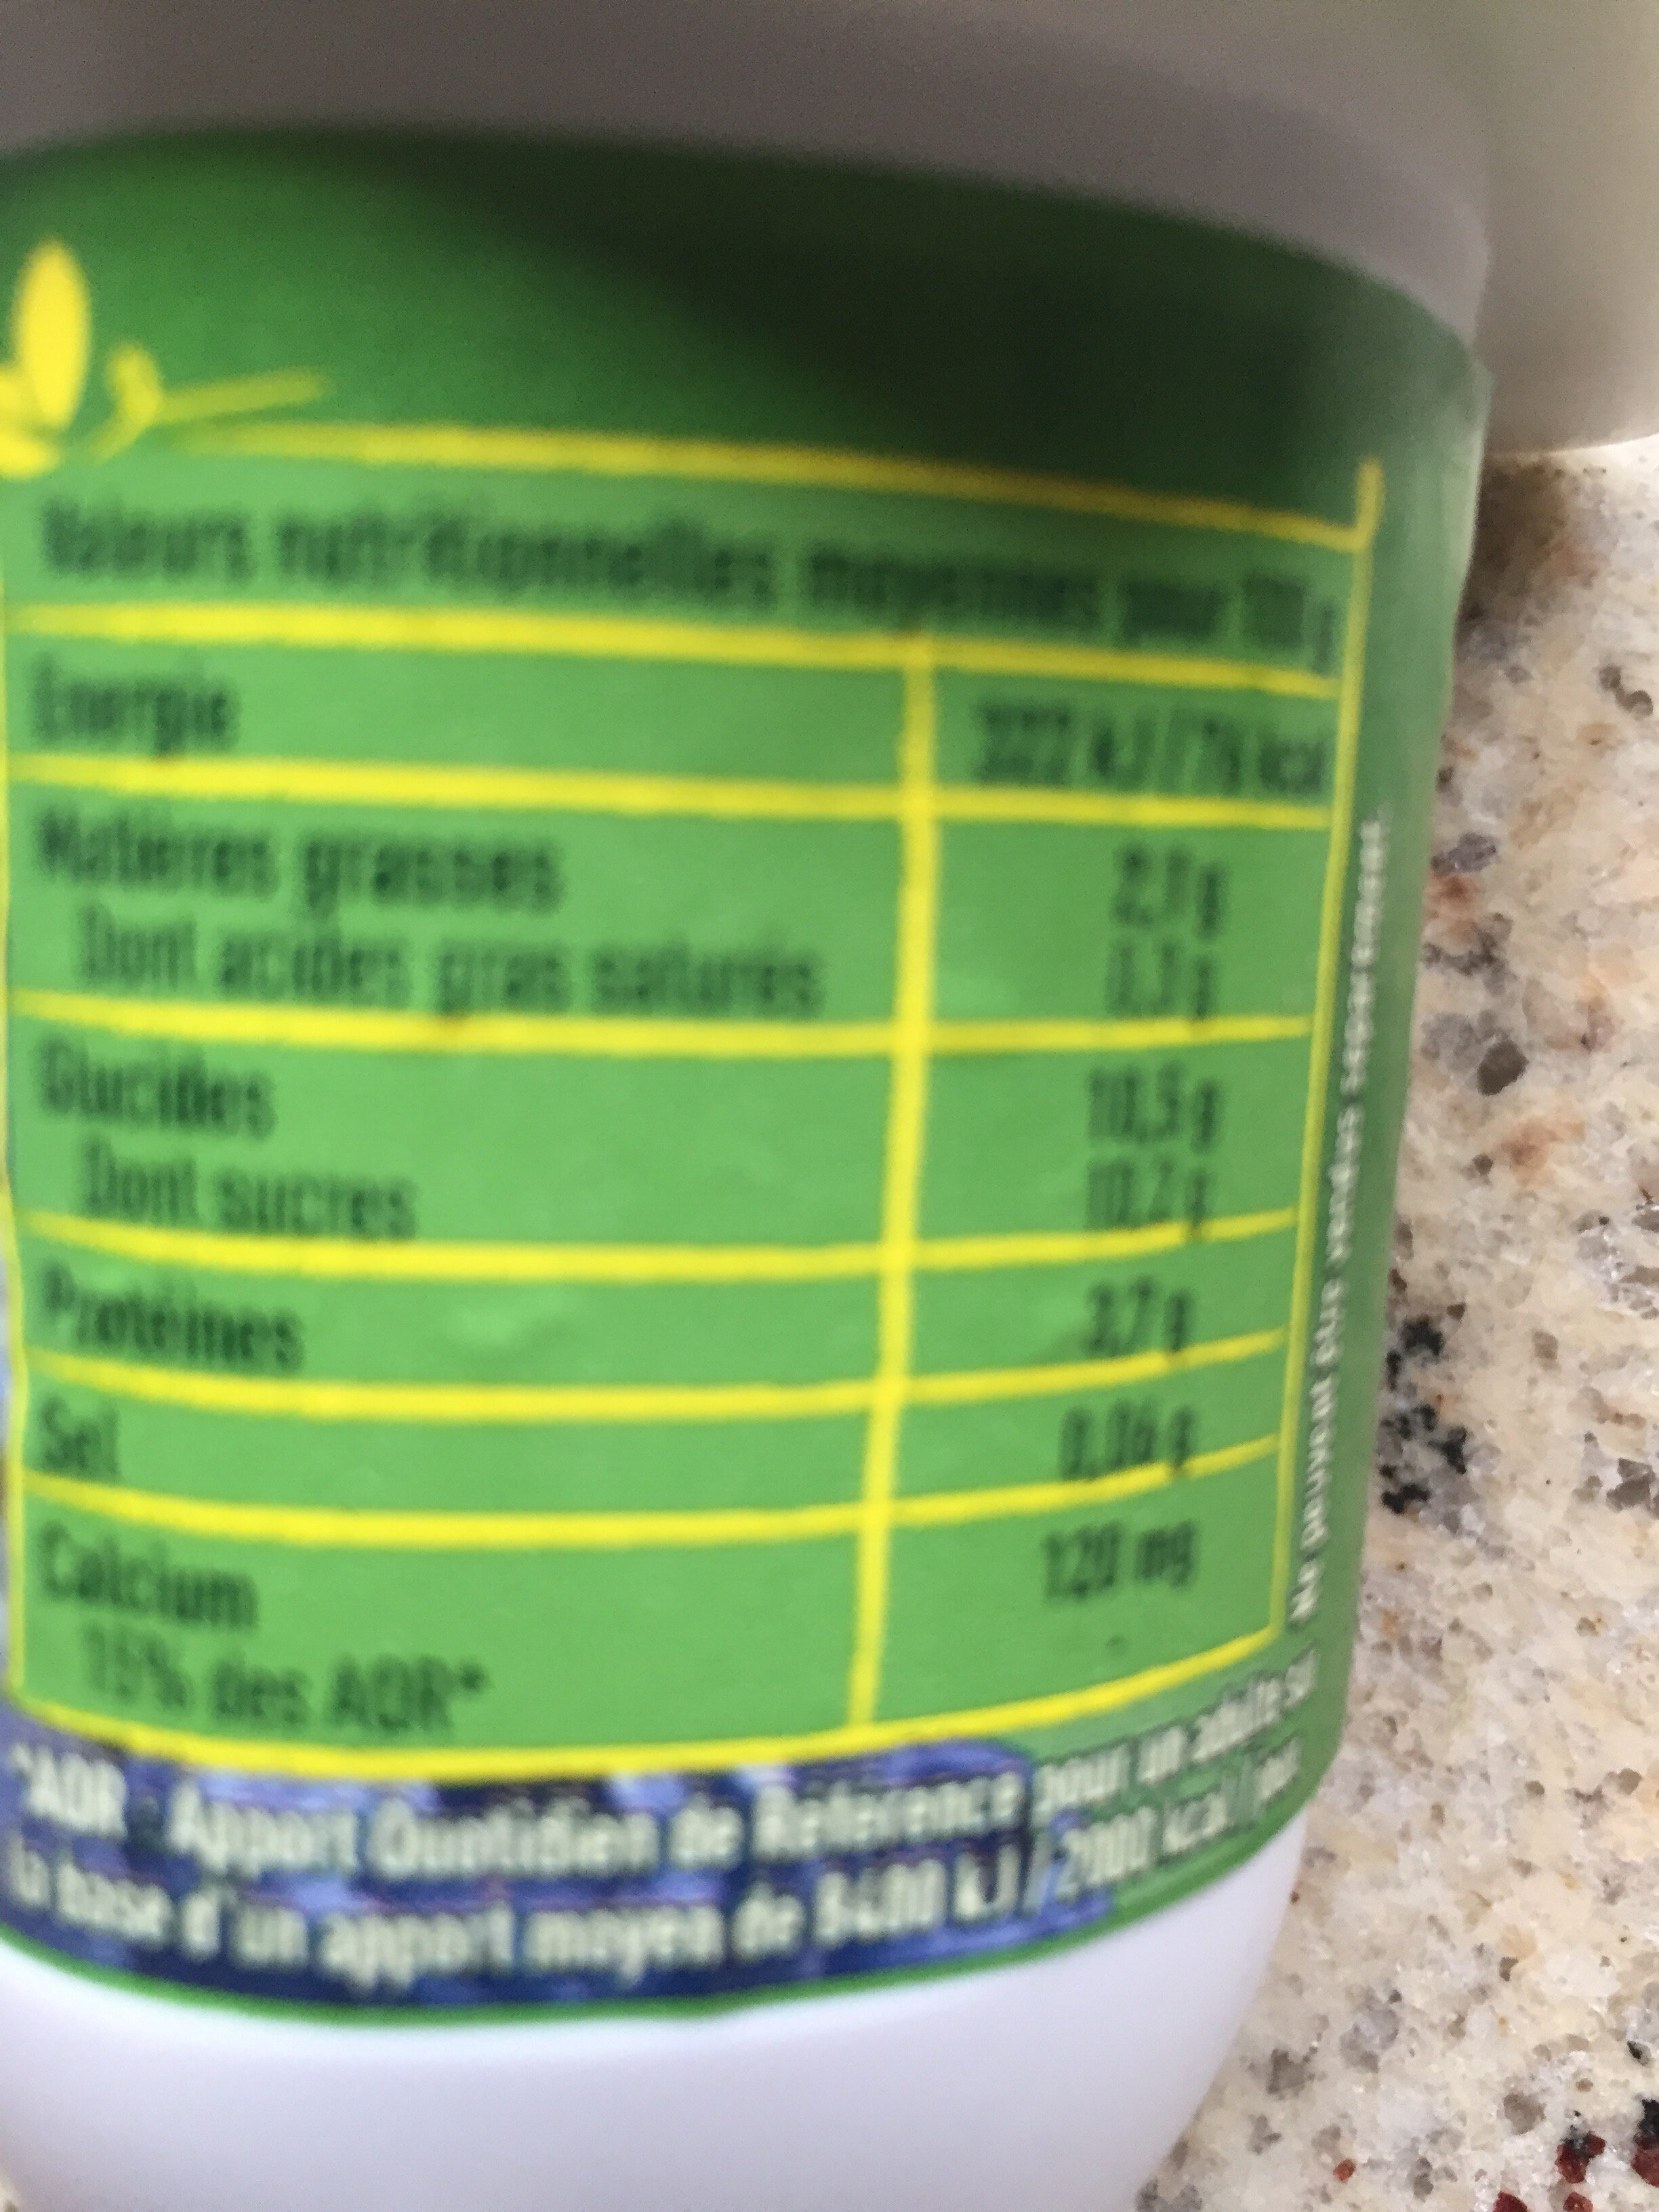 Soja myrtille 4×100 g - Nutrition facts - fr